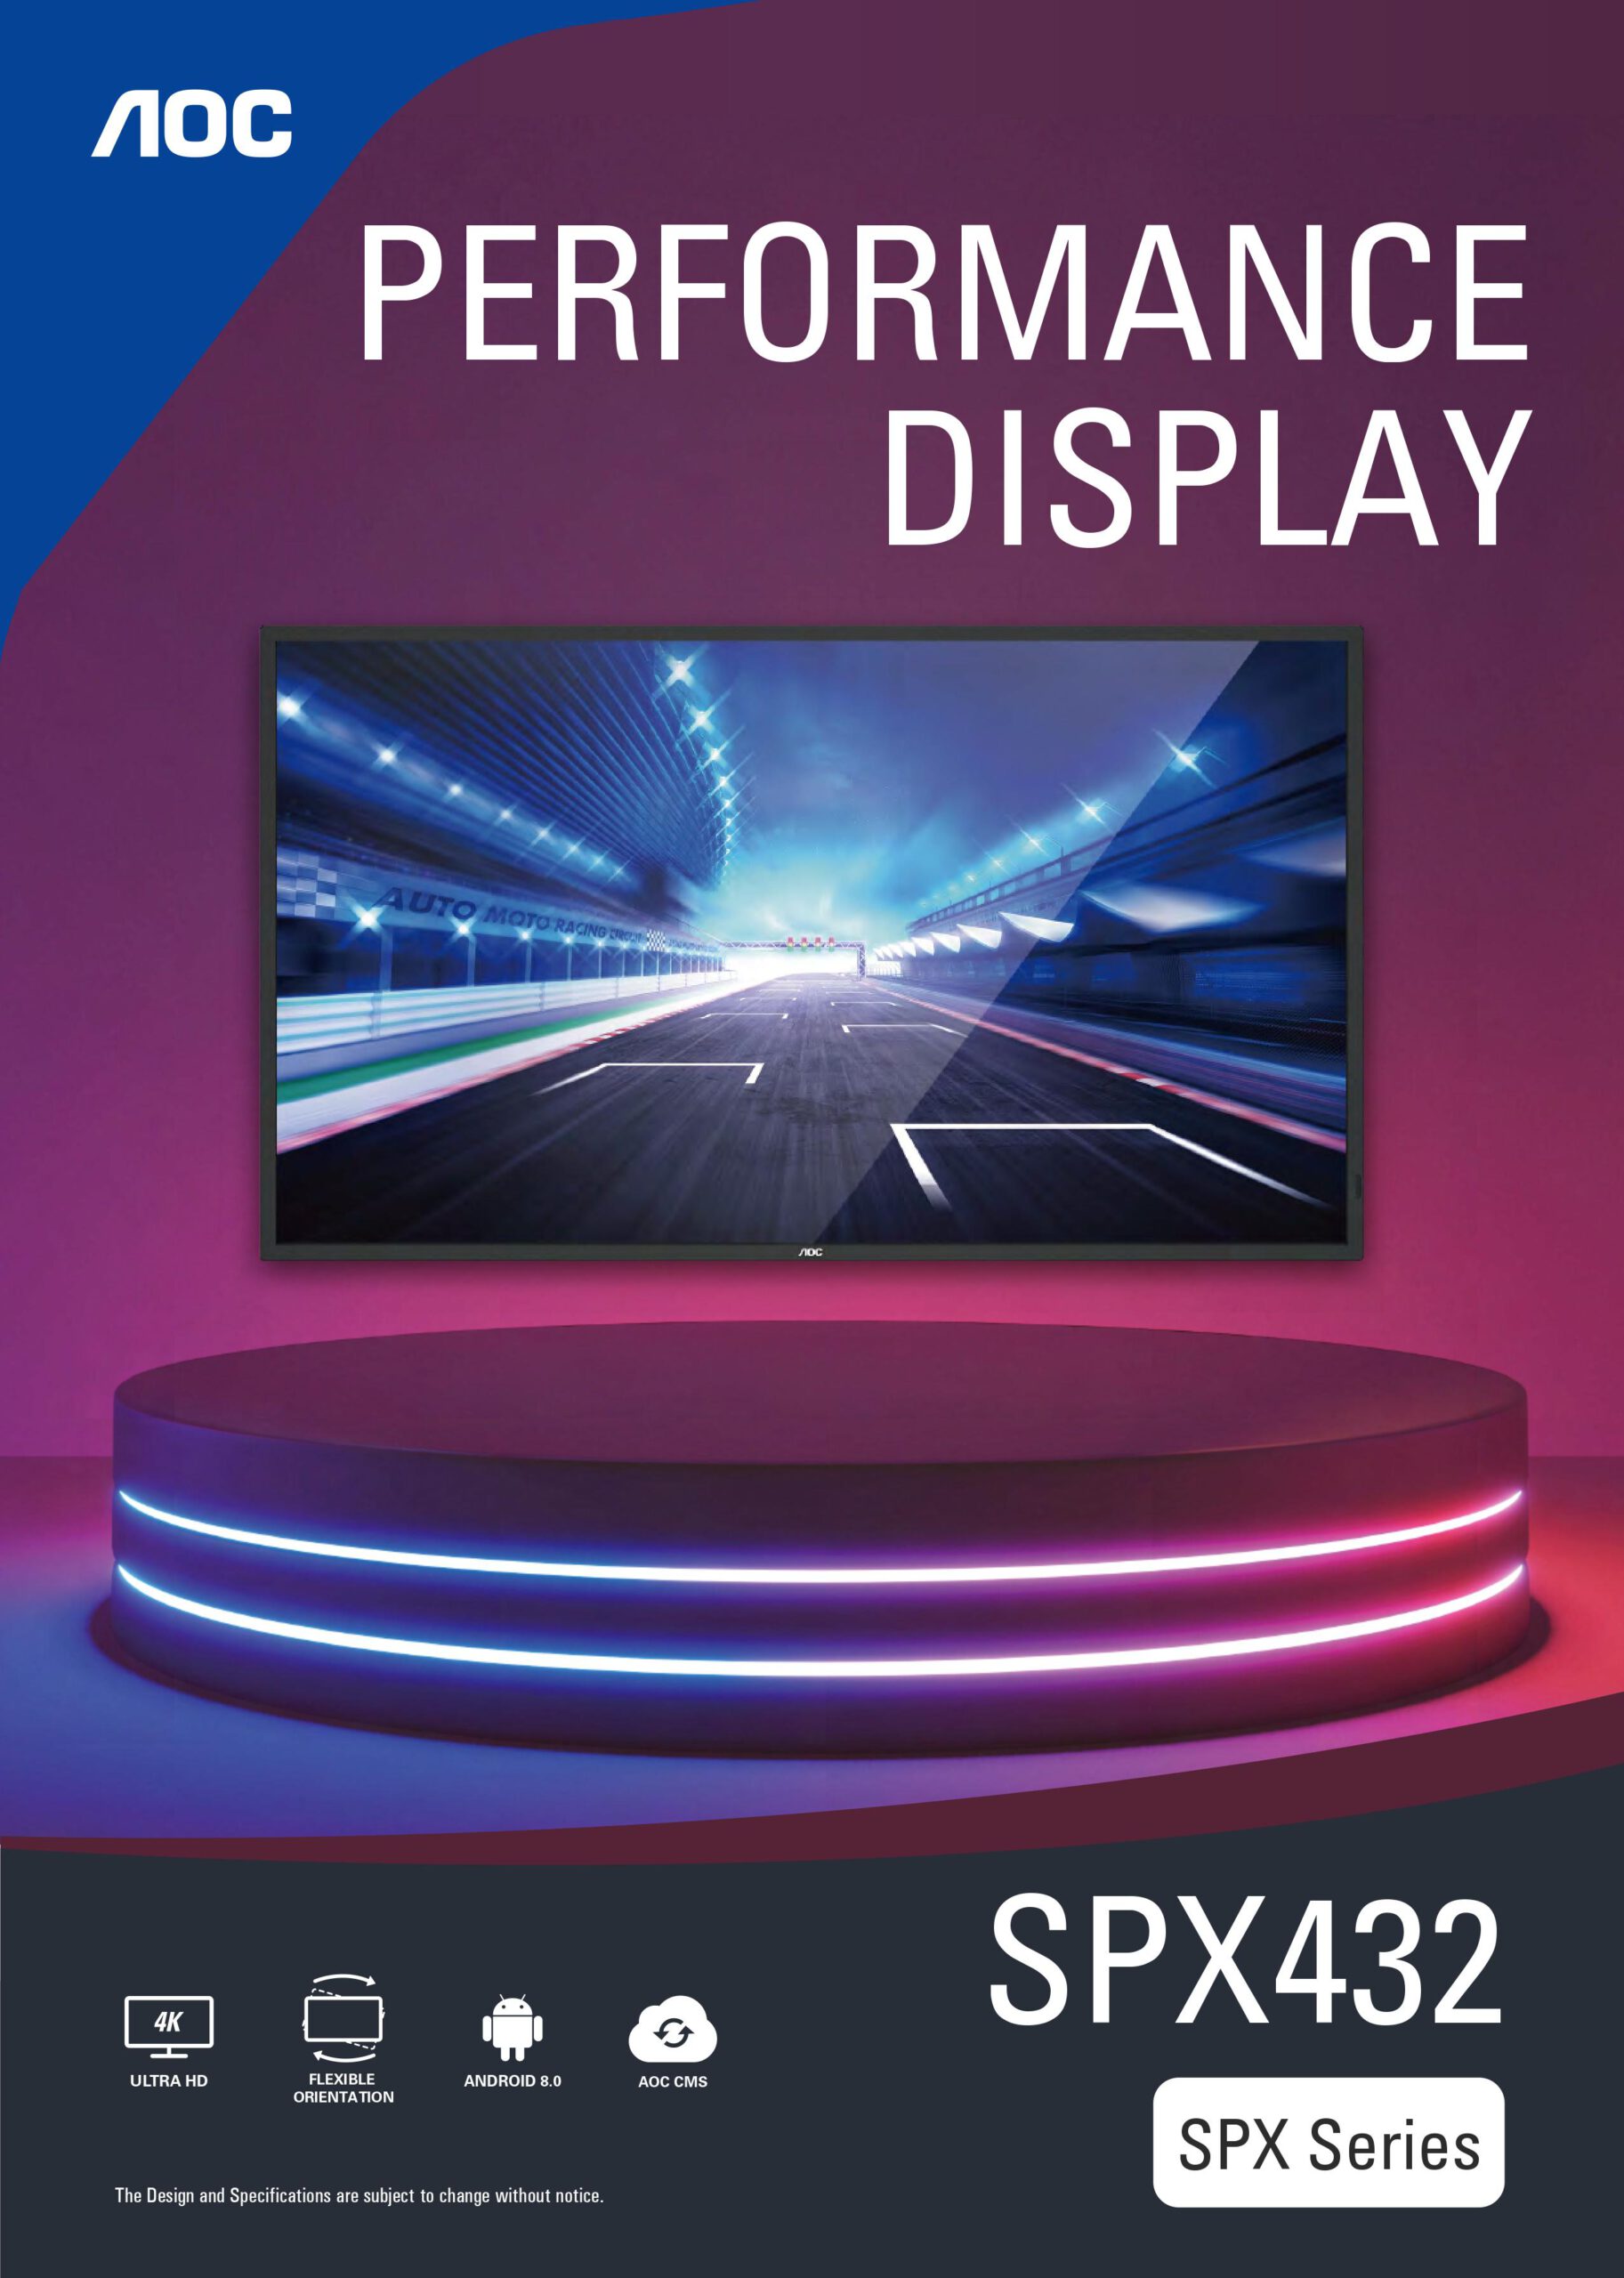 AOC Performace Display SPX432 SP Series